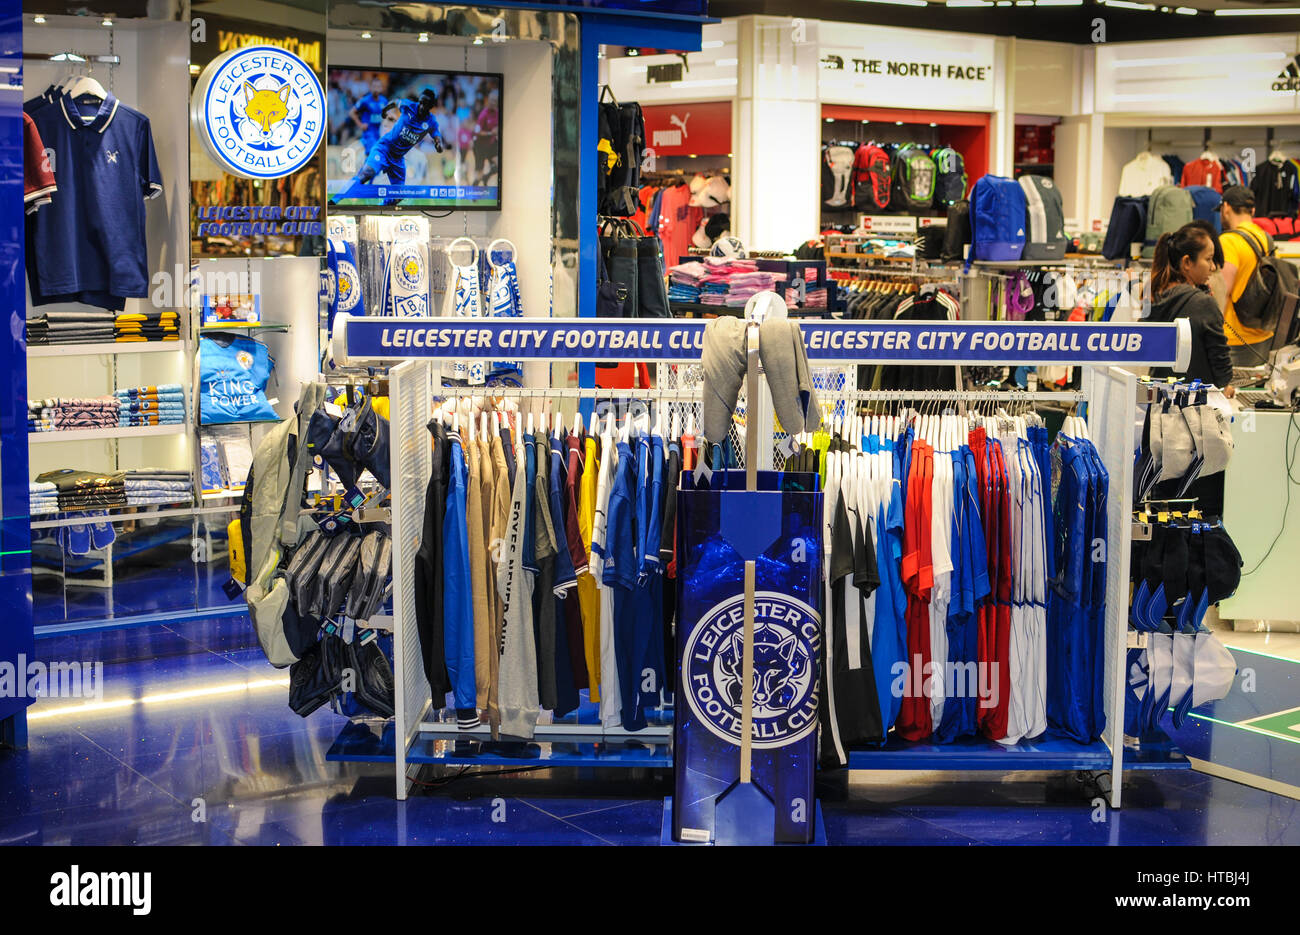 Leicester City Football Club-Shop am Flughafen Bangkok Suvarnabhumi  Stockfotografie - Alamy